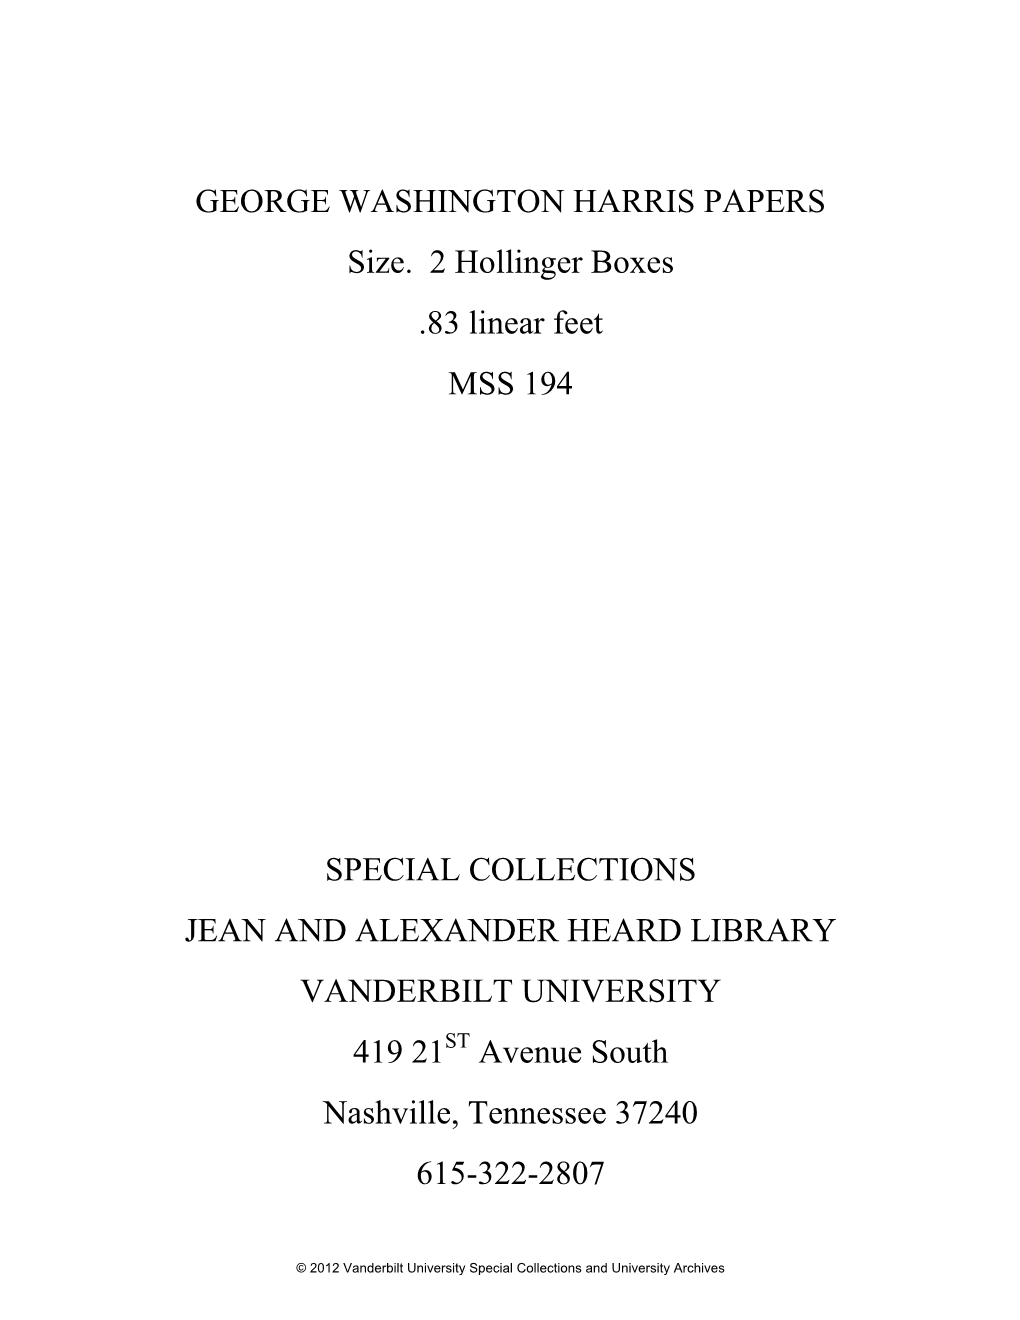 GEORGE WASHINGTON HARRIS PAPERS Size